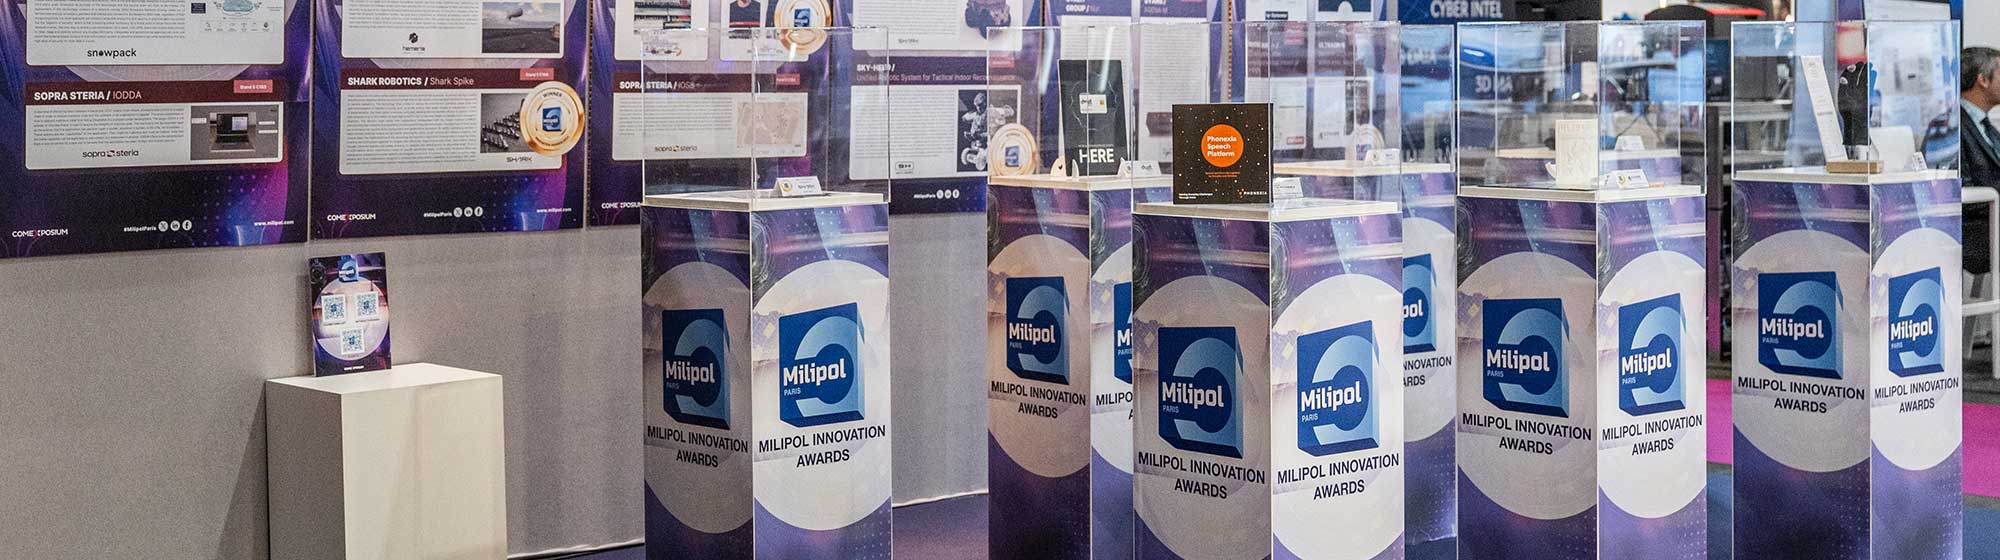 milipol's innovation awards booth